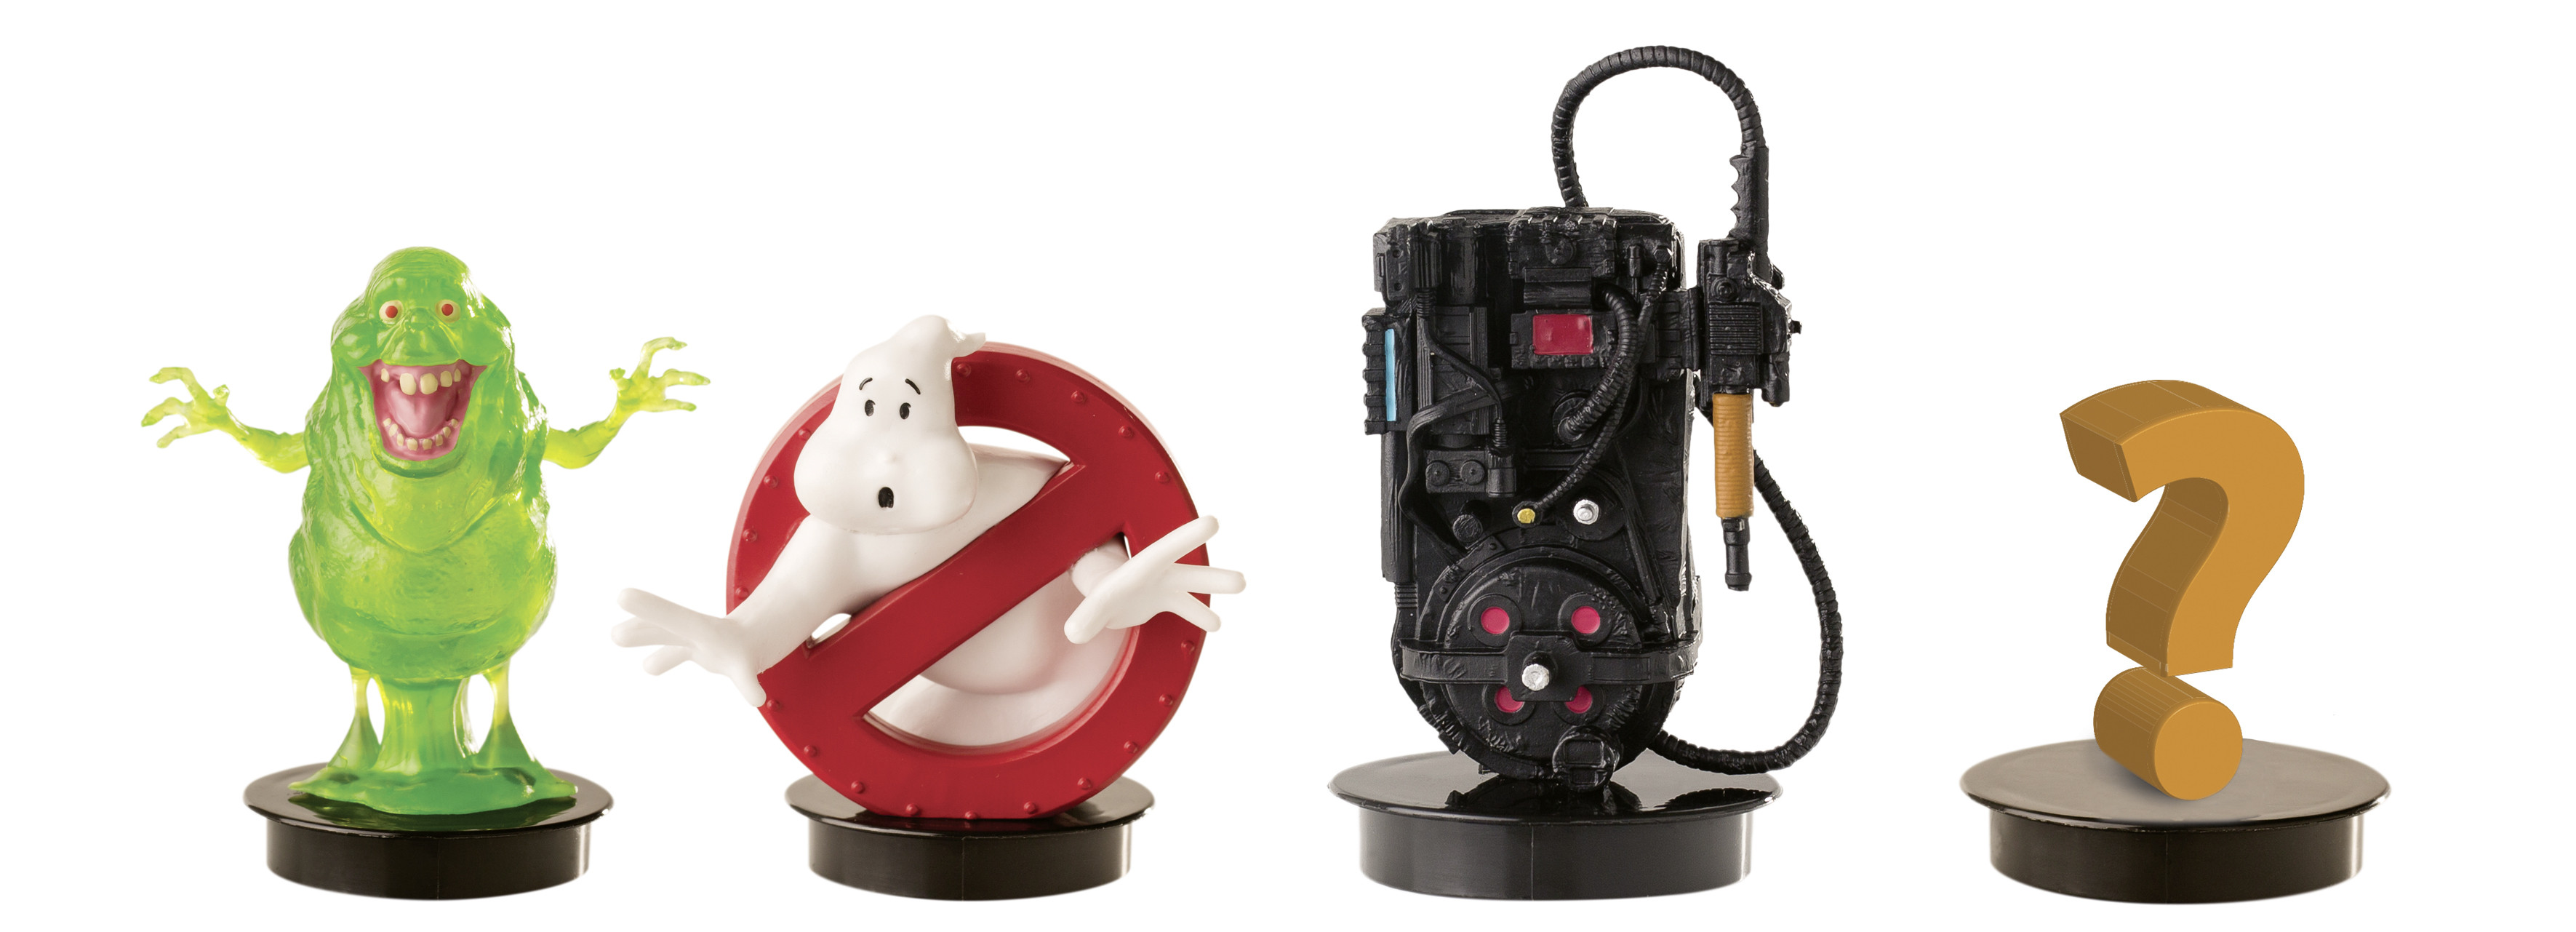 Ghostbusters souvenir popcorn bucket and soda cup at Cinemark! : r